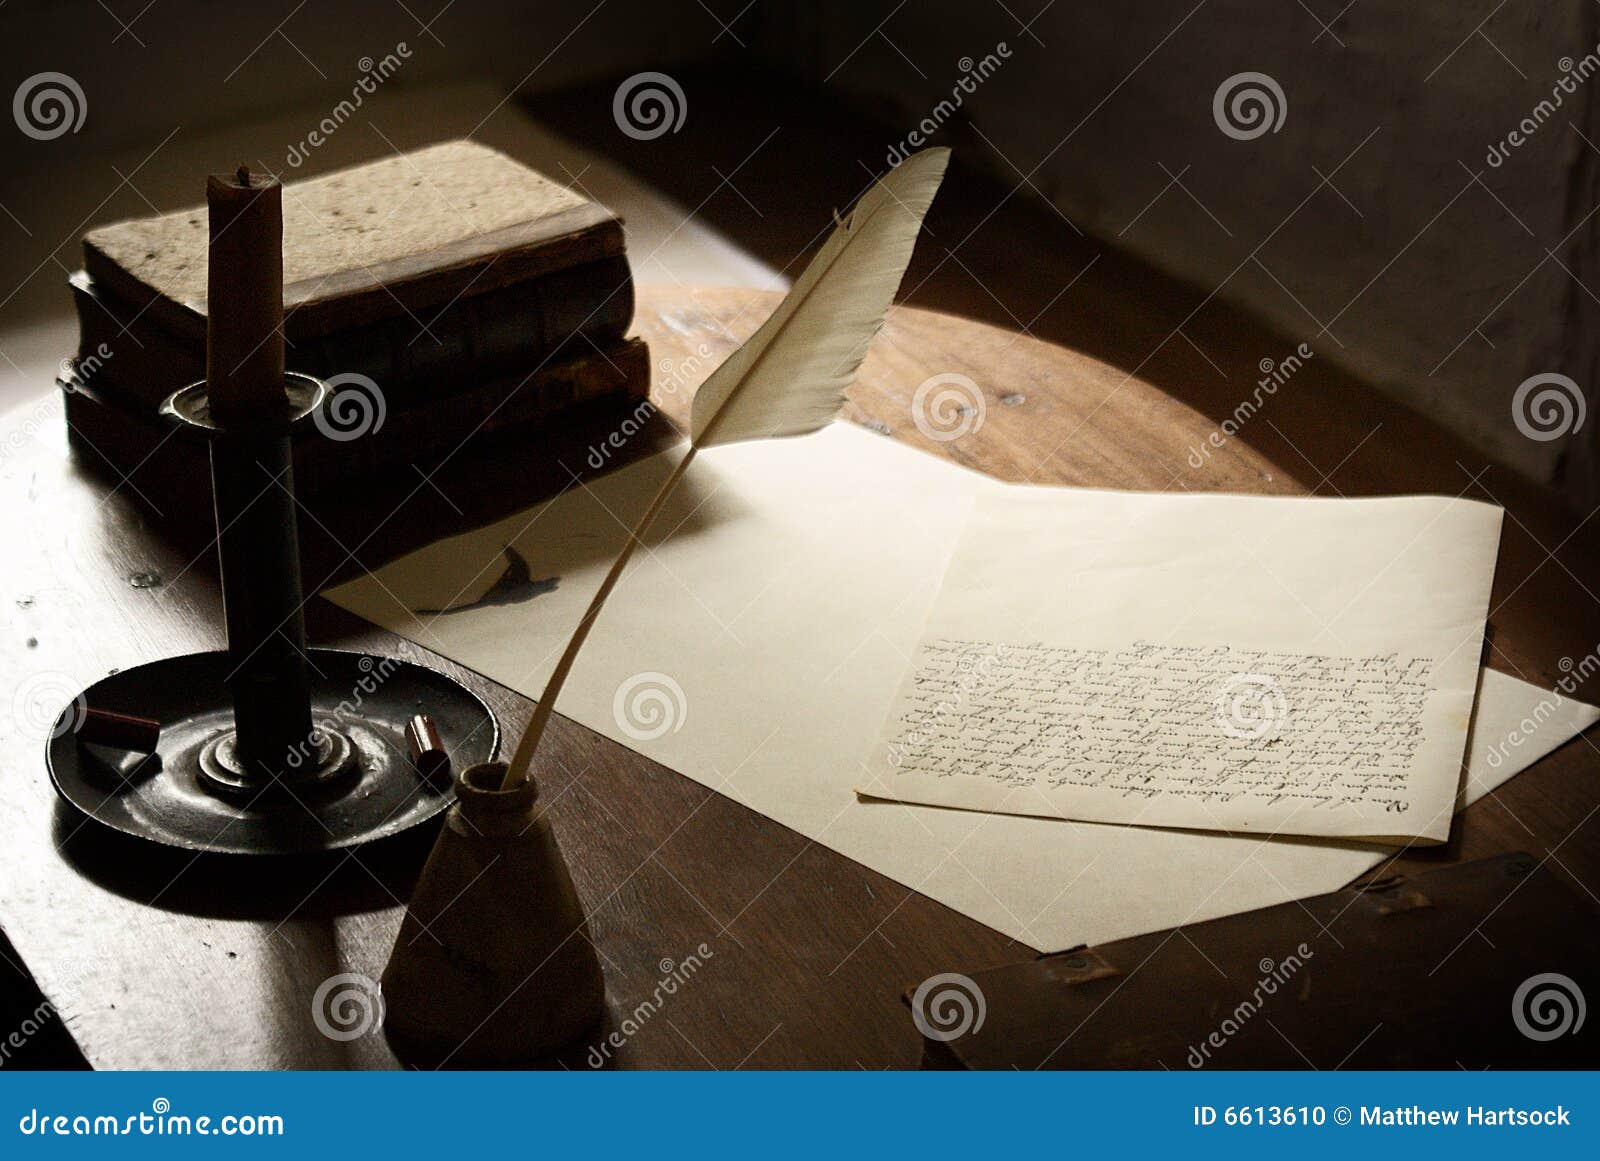 215 #1 145 mm MagiDeal 8pcs Papel De Escribir Retro Efectos De Escritorio para Cartas de Varios Diseños 